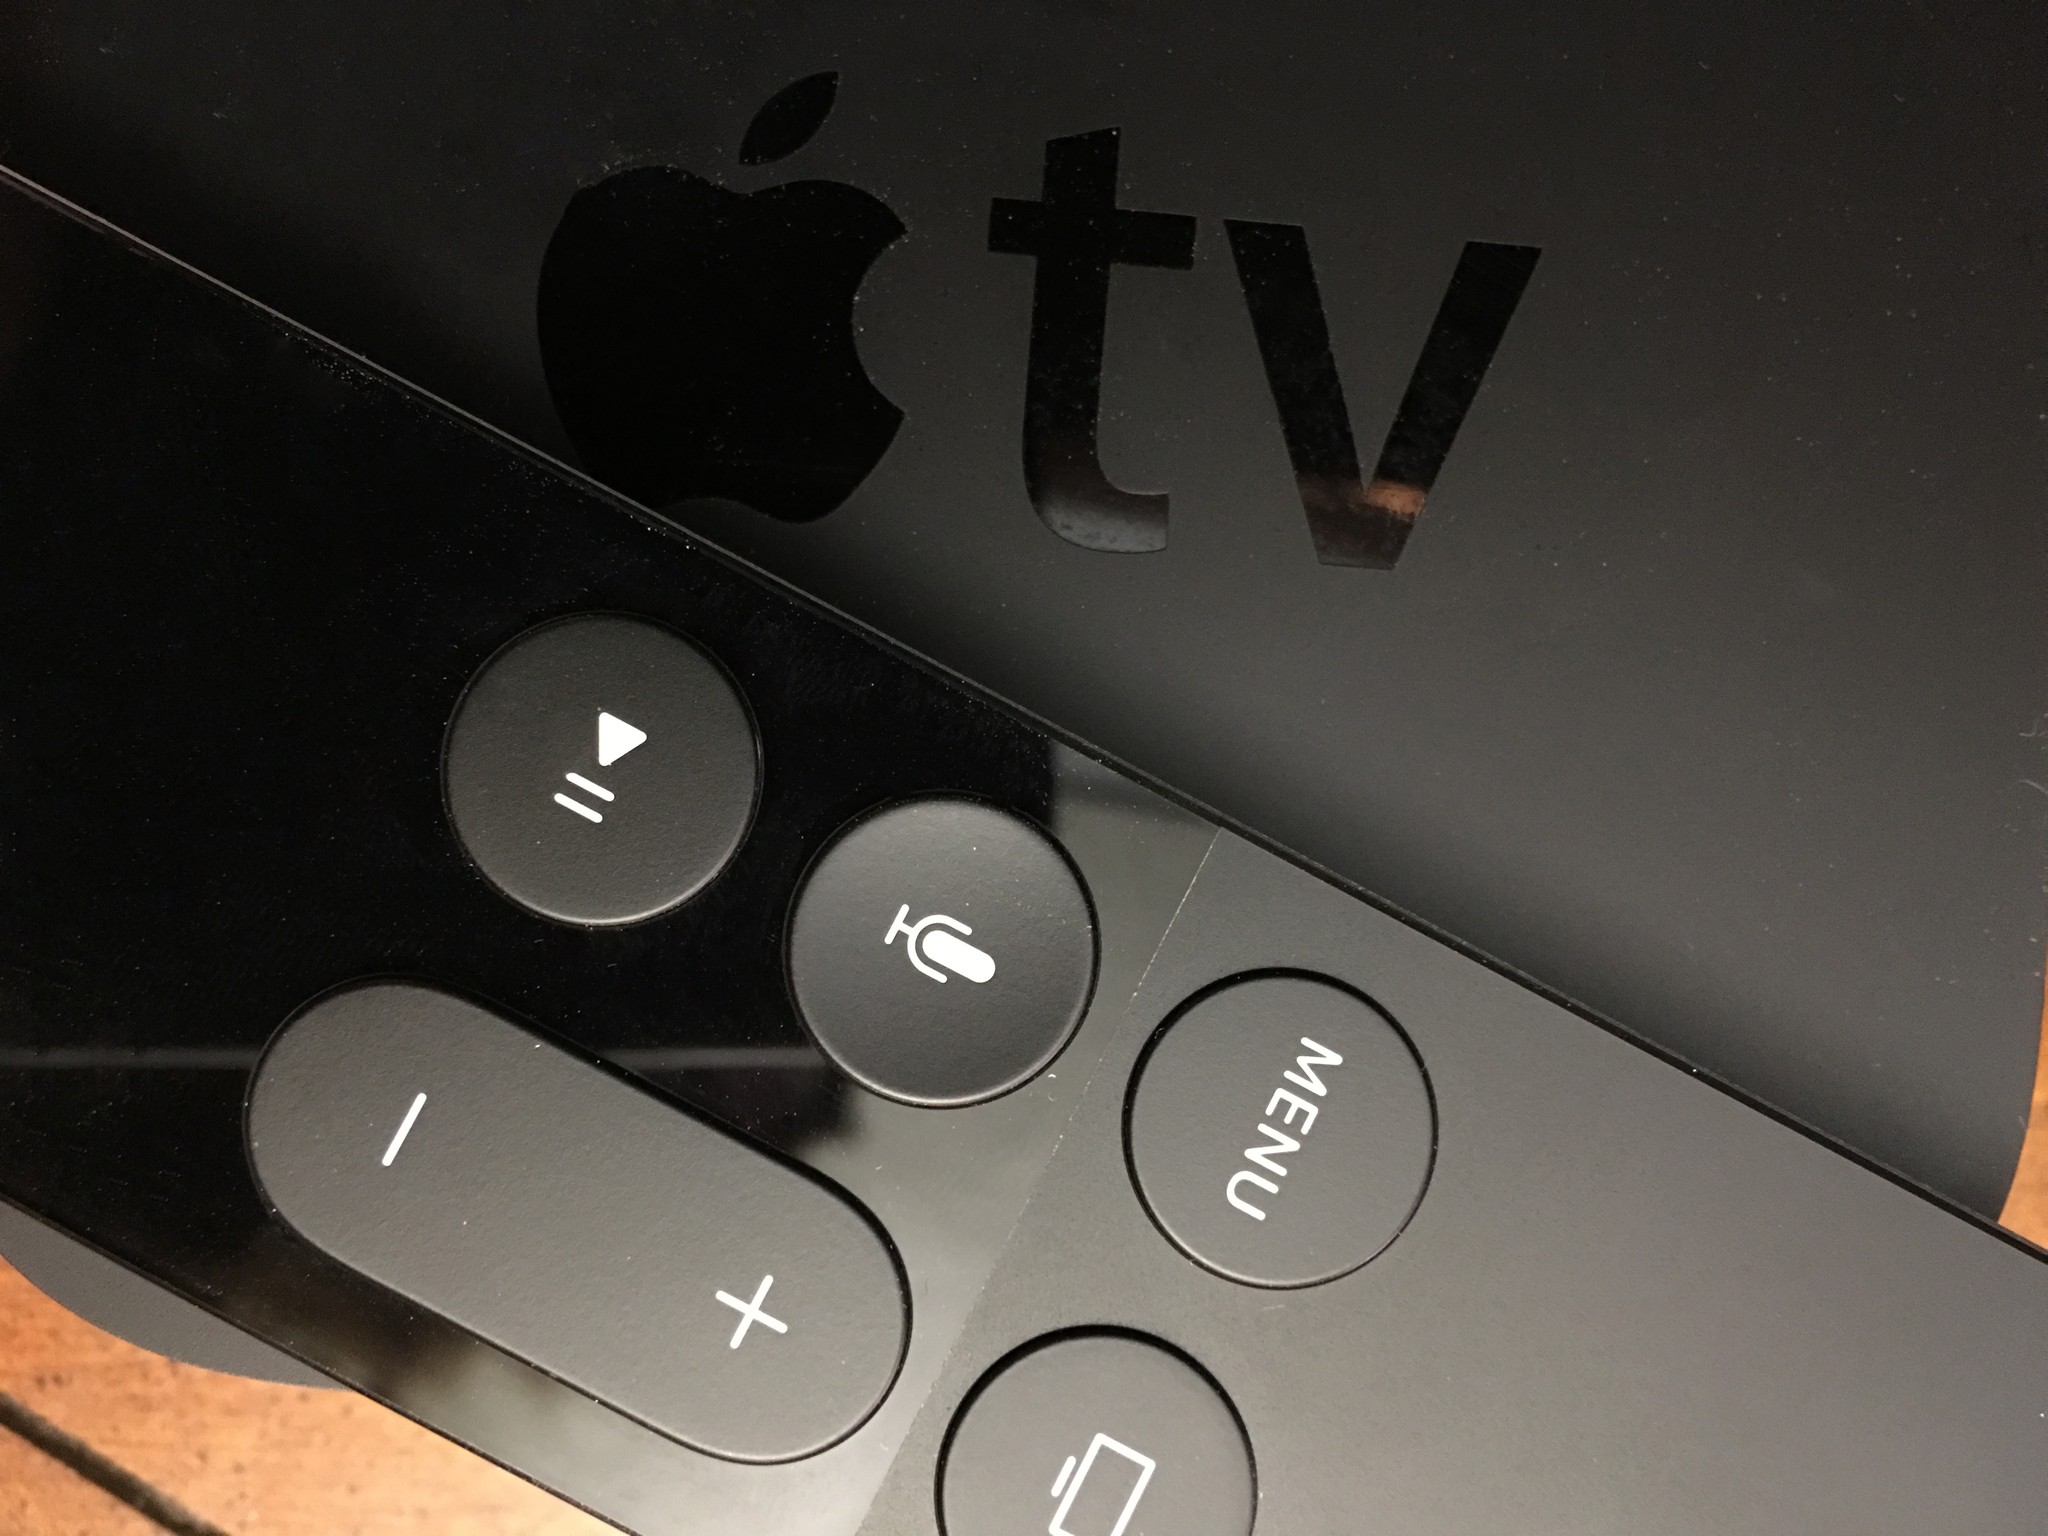 Apple TV Remote and box